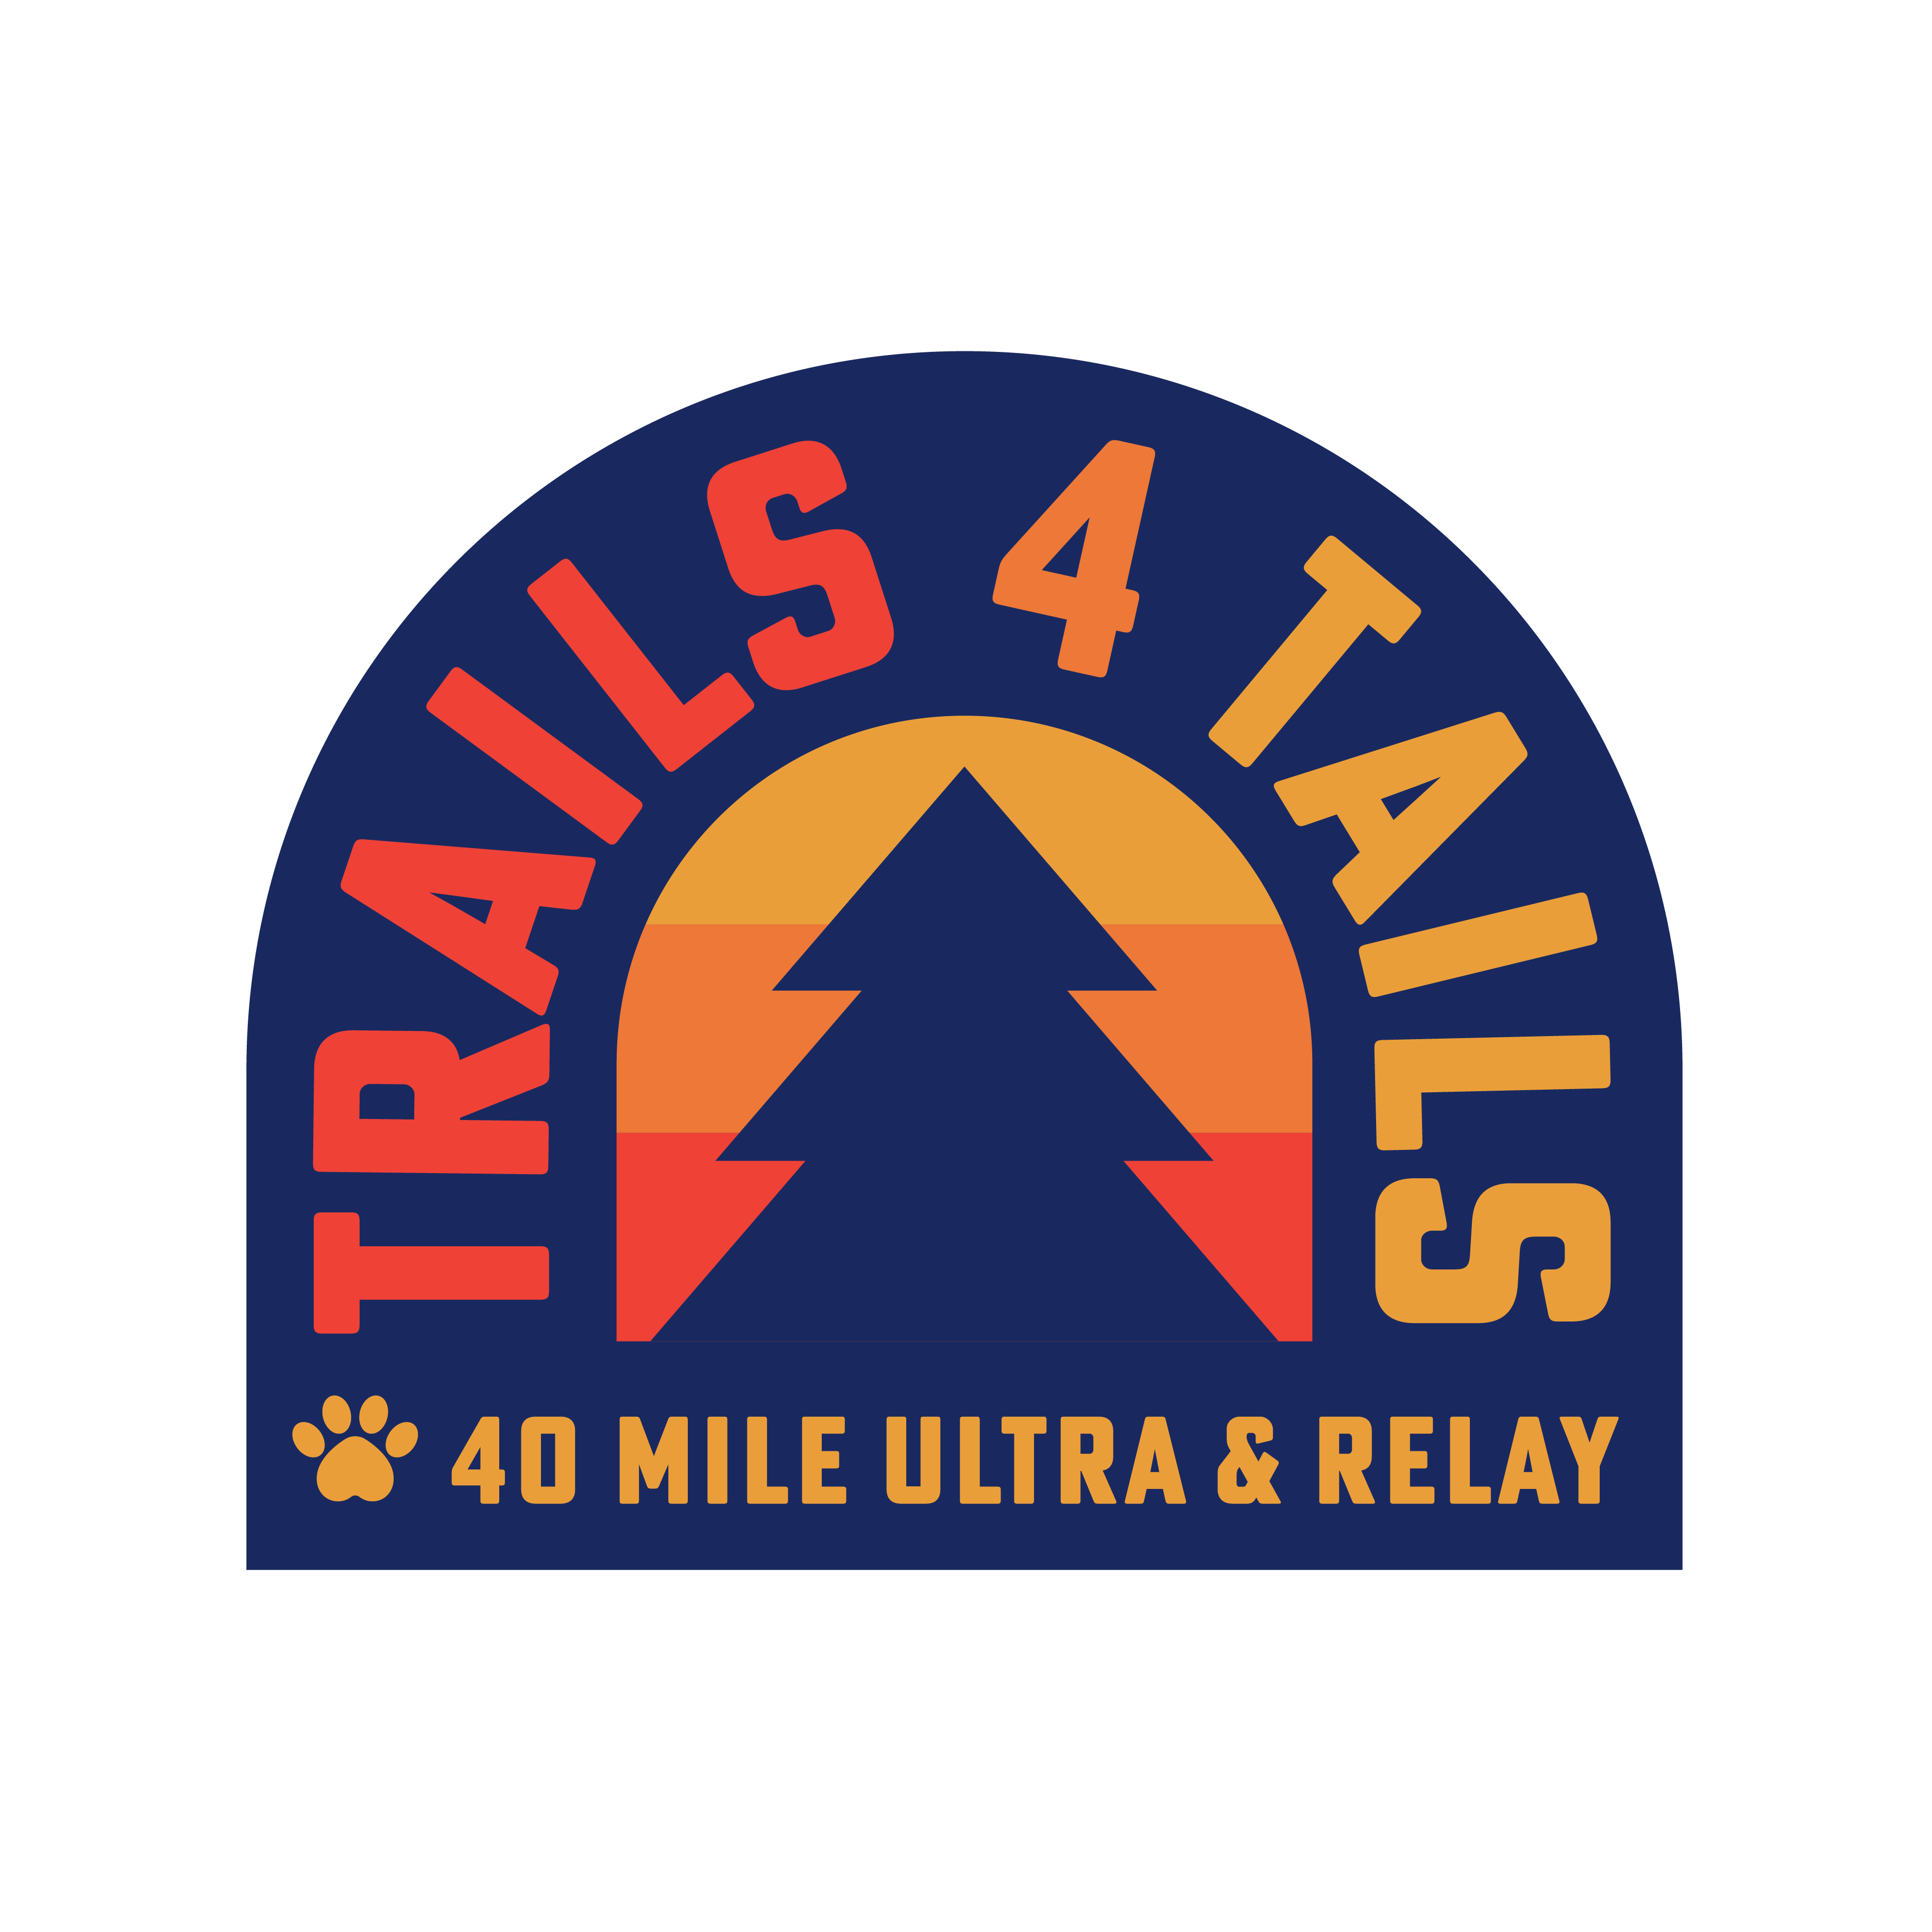 Trails 4 Tails 40 Mile Ultra logo design by logo designer Pod Design Shop for your inspiration and for the worlds largest logo competition